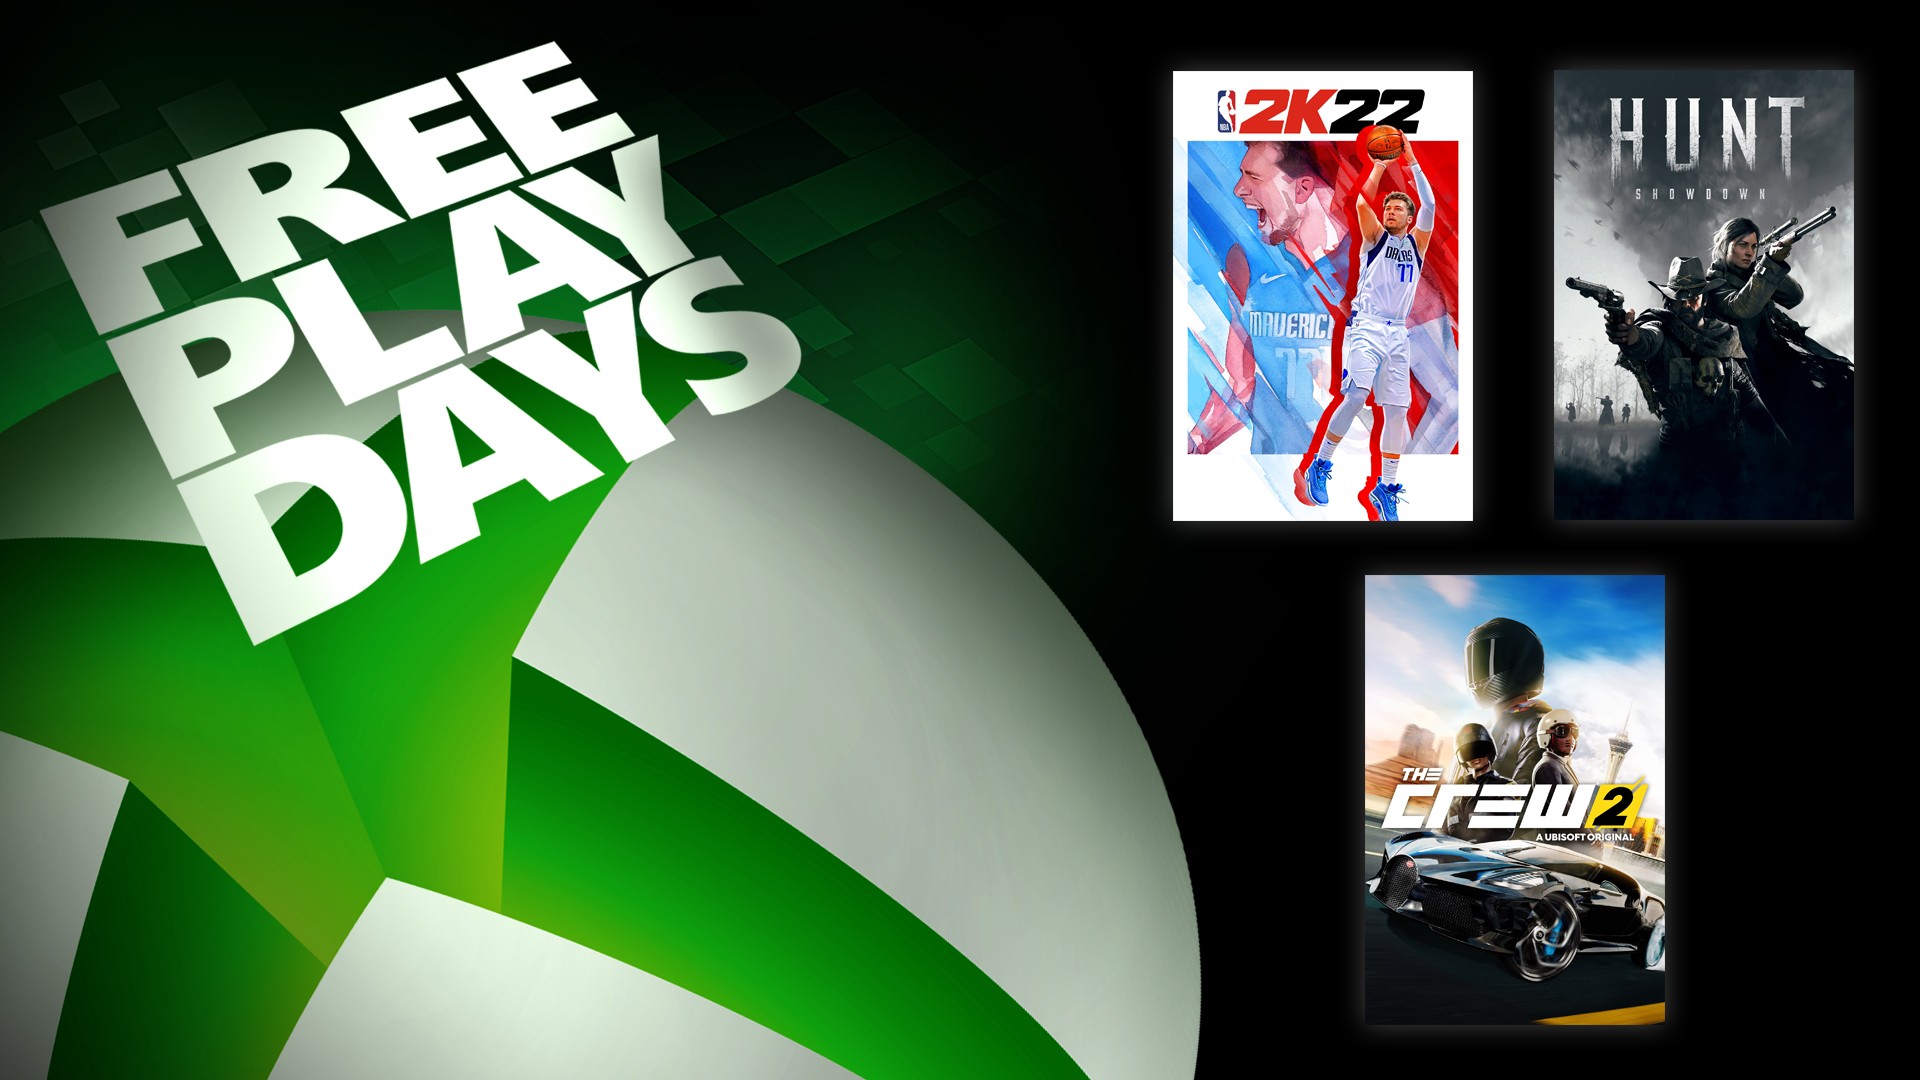 Free Play Days – NBA 2K22, The Crew 2, and Hunt: Showdown